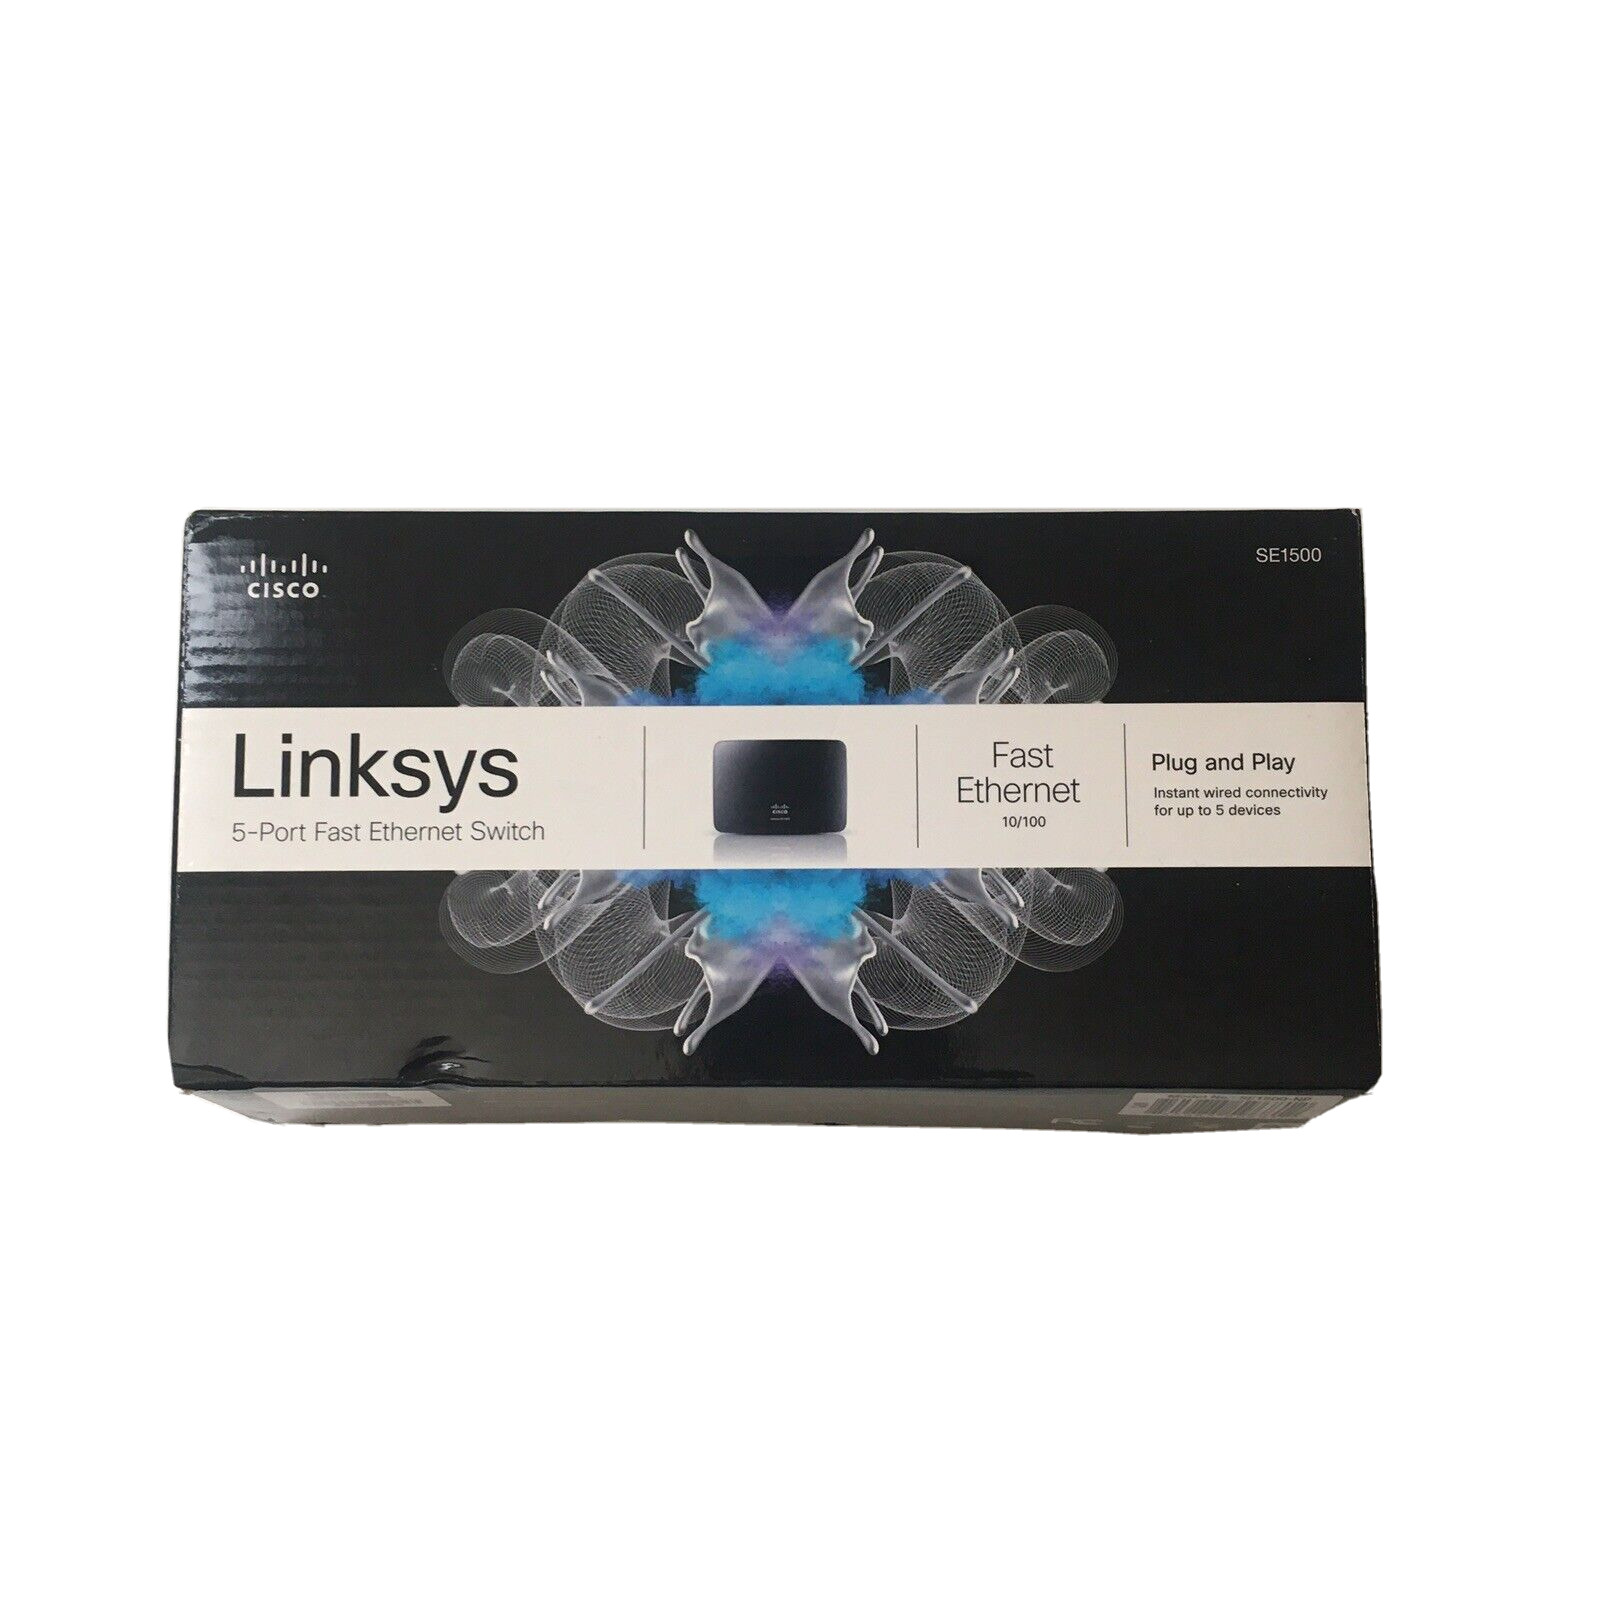 Cisco Linksys Ethernet Switch SE1500 5-Port Fast 10/100 Tested